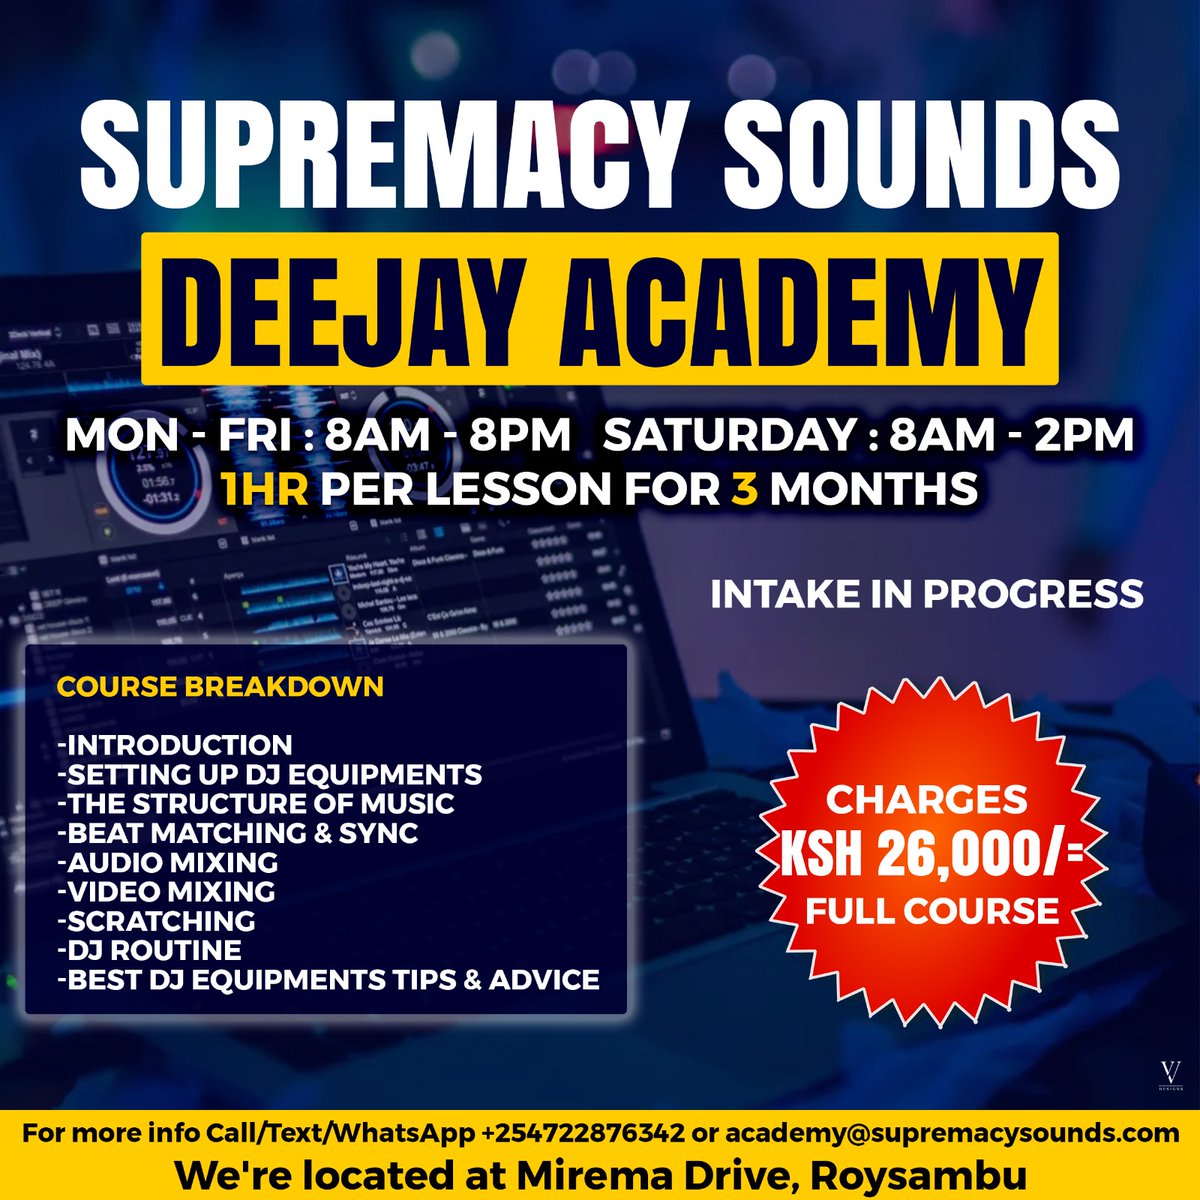 Dj Academy intake is in progress... Tutembelee Mirema Drive, Roysambu for enrolment. Call/Text/WhatsApp 0722876342 for more info. #SupremacySounds